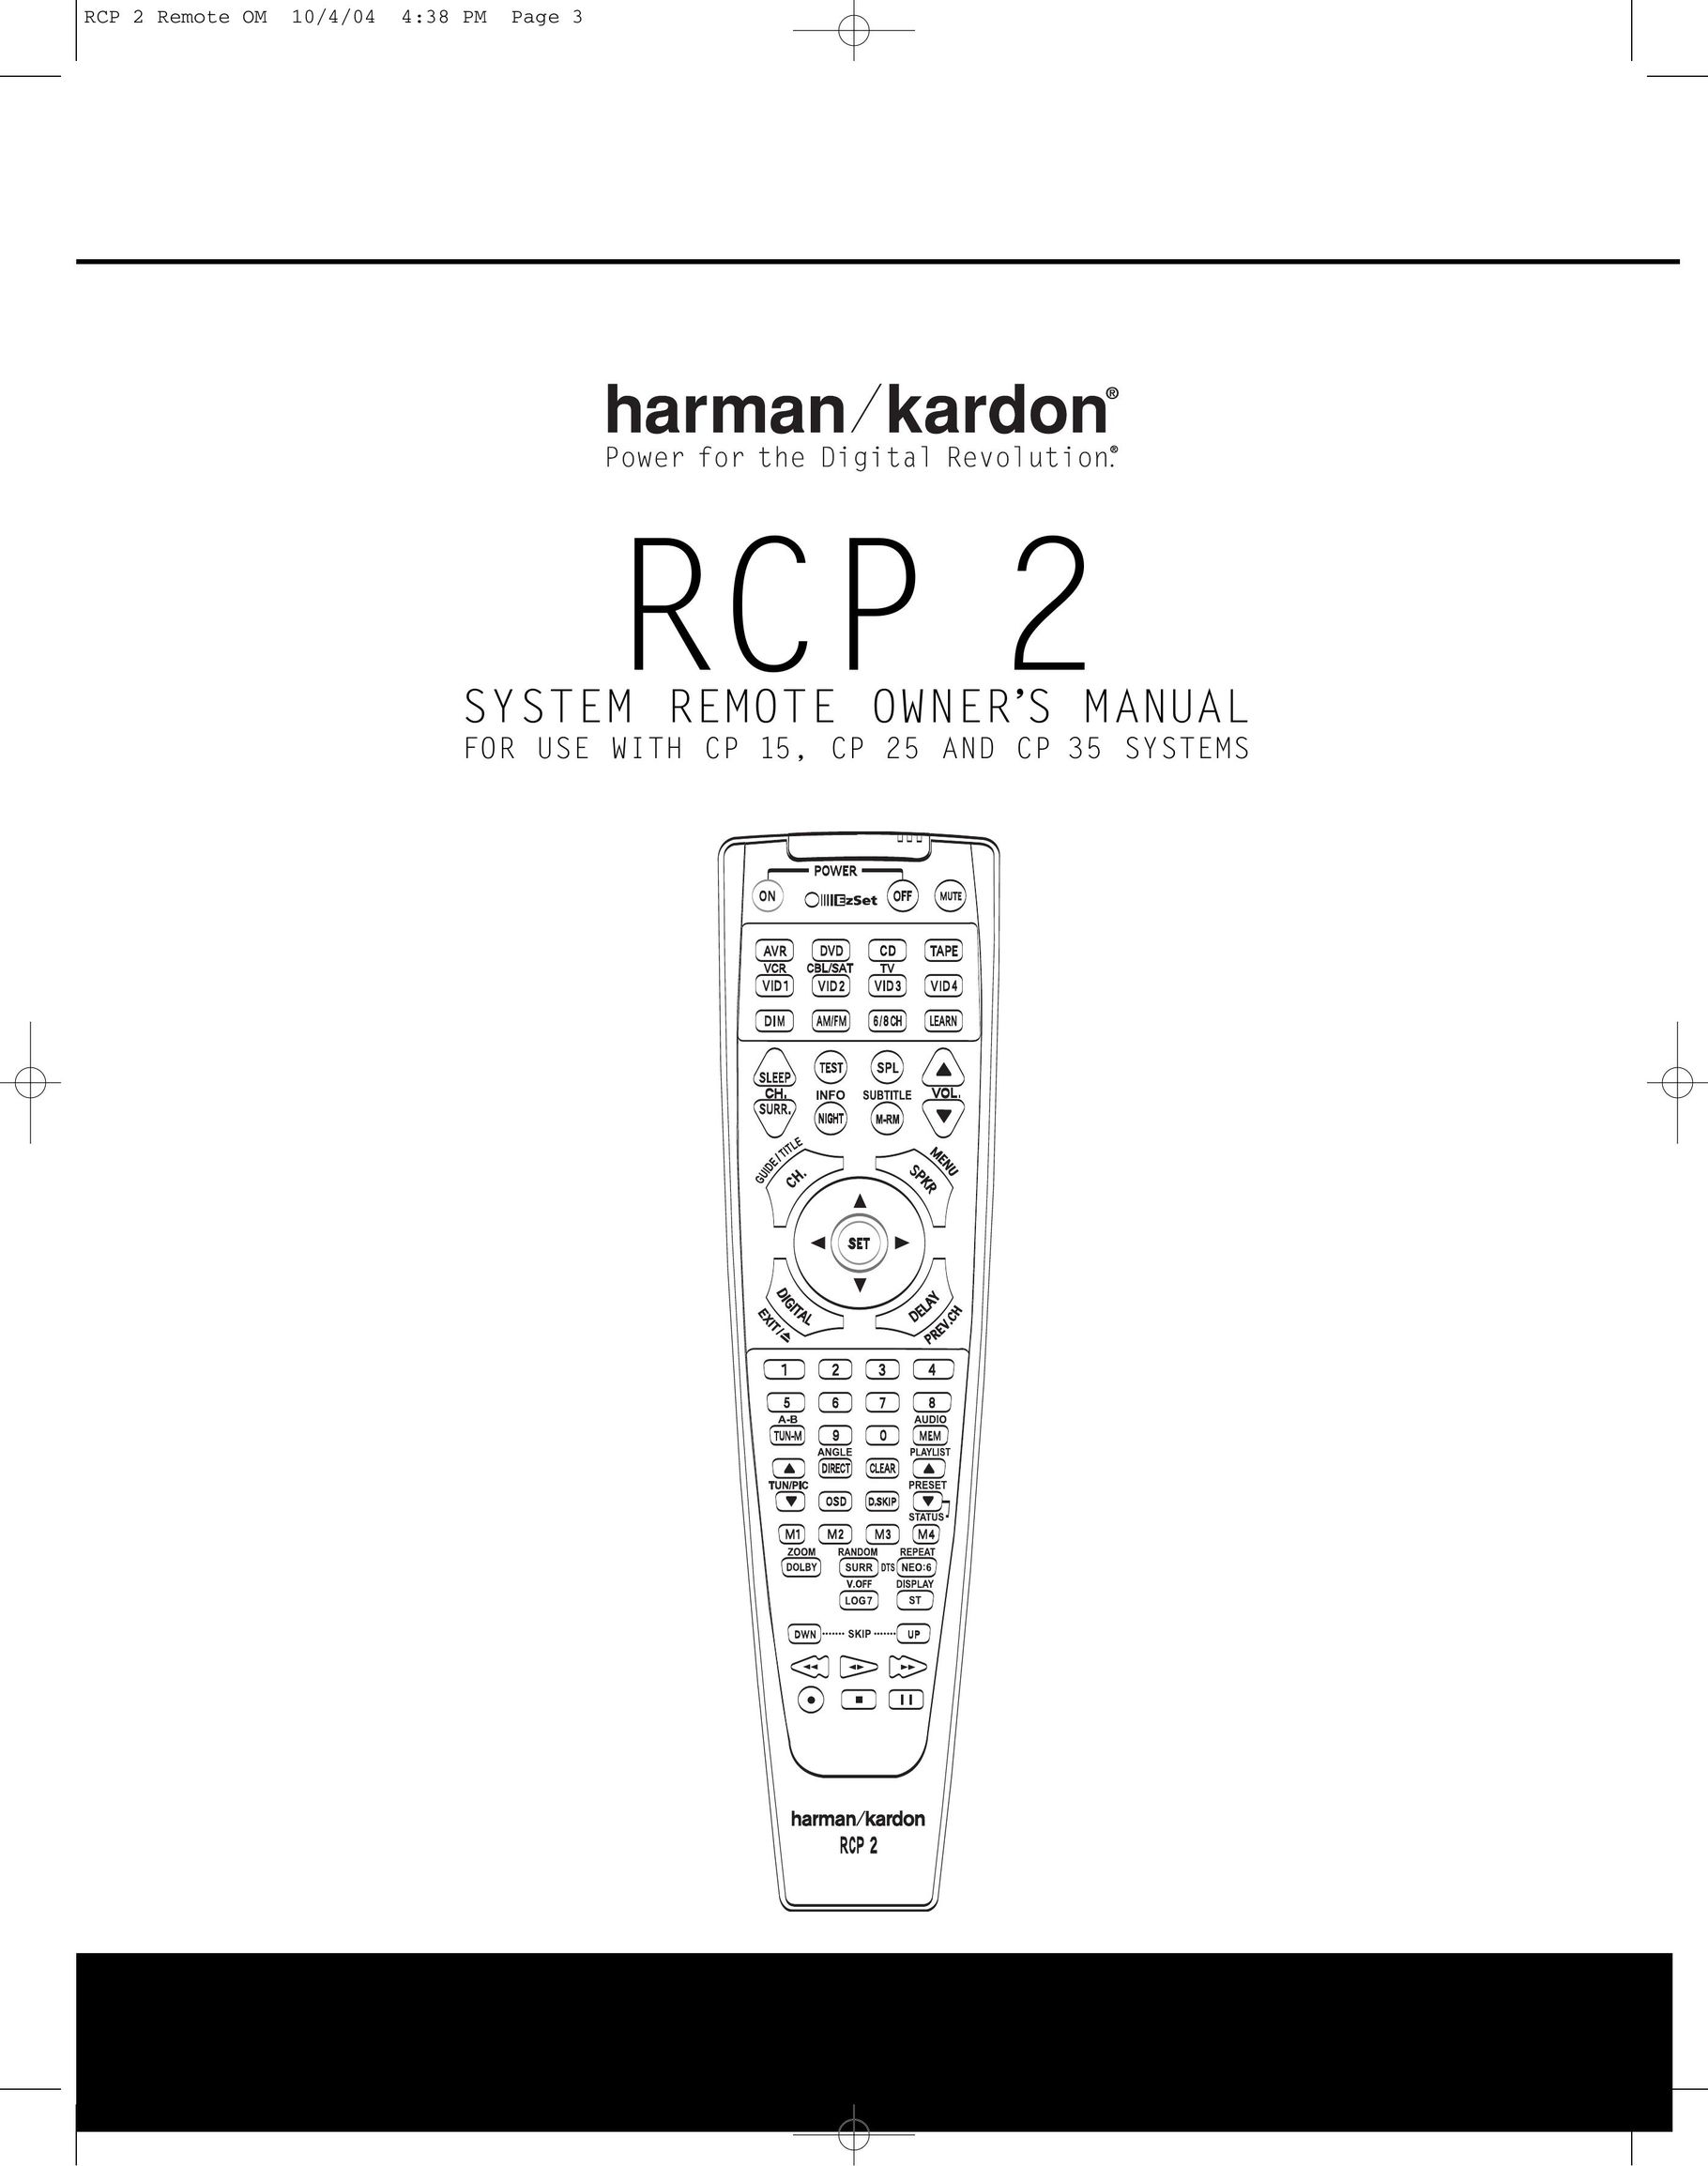 Harman-Kardon RCP 2 Universal Remote User Manual